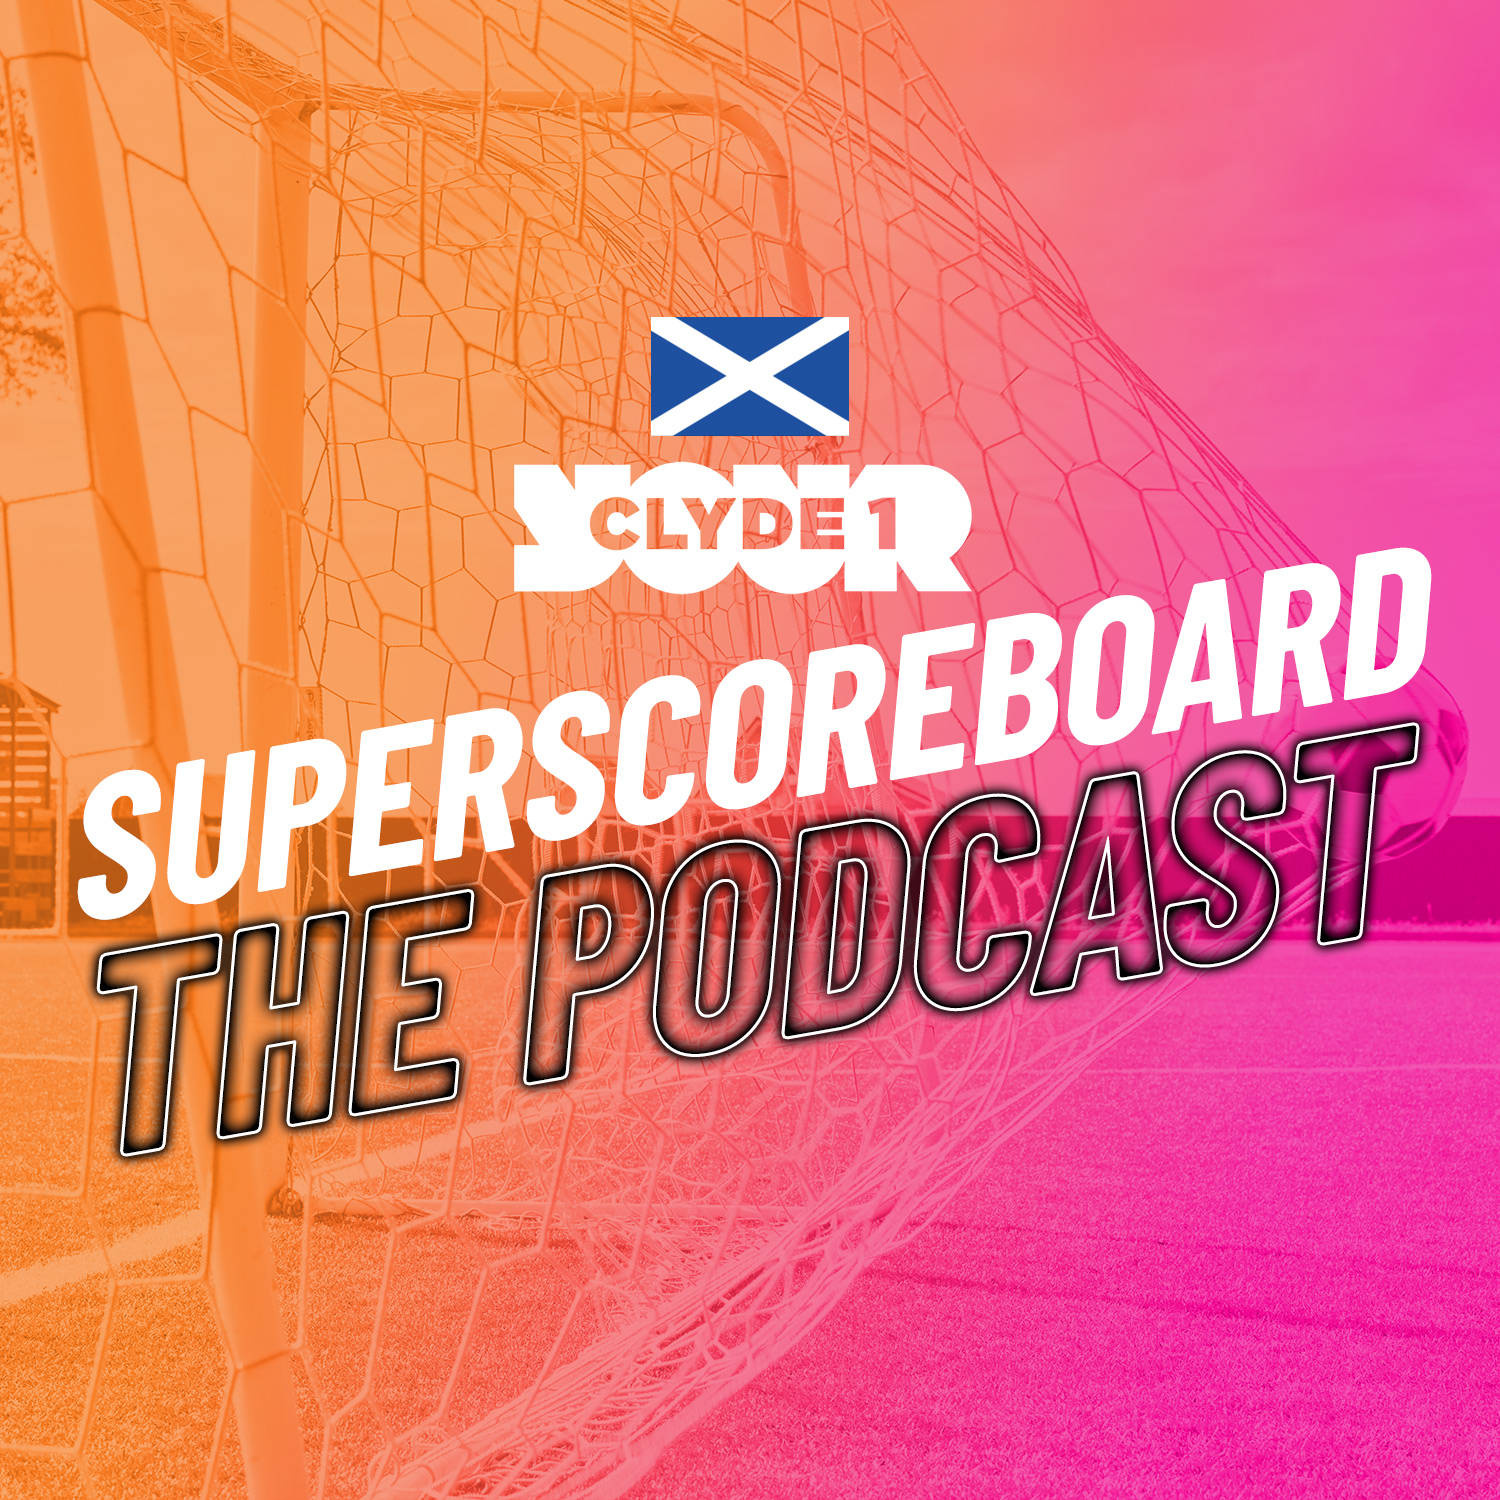 Tuesday 19th December Clyde 1 Superscoreboard